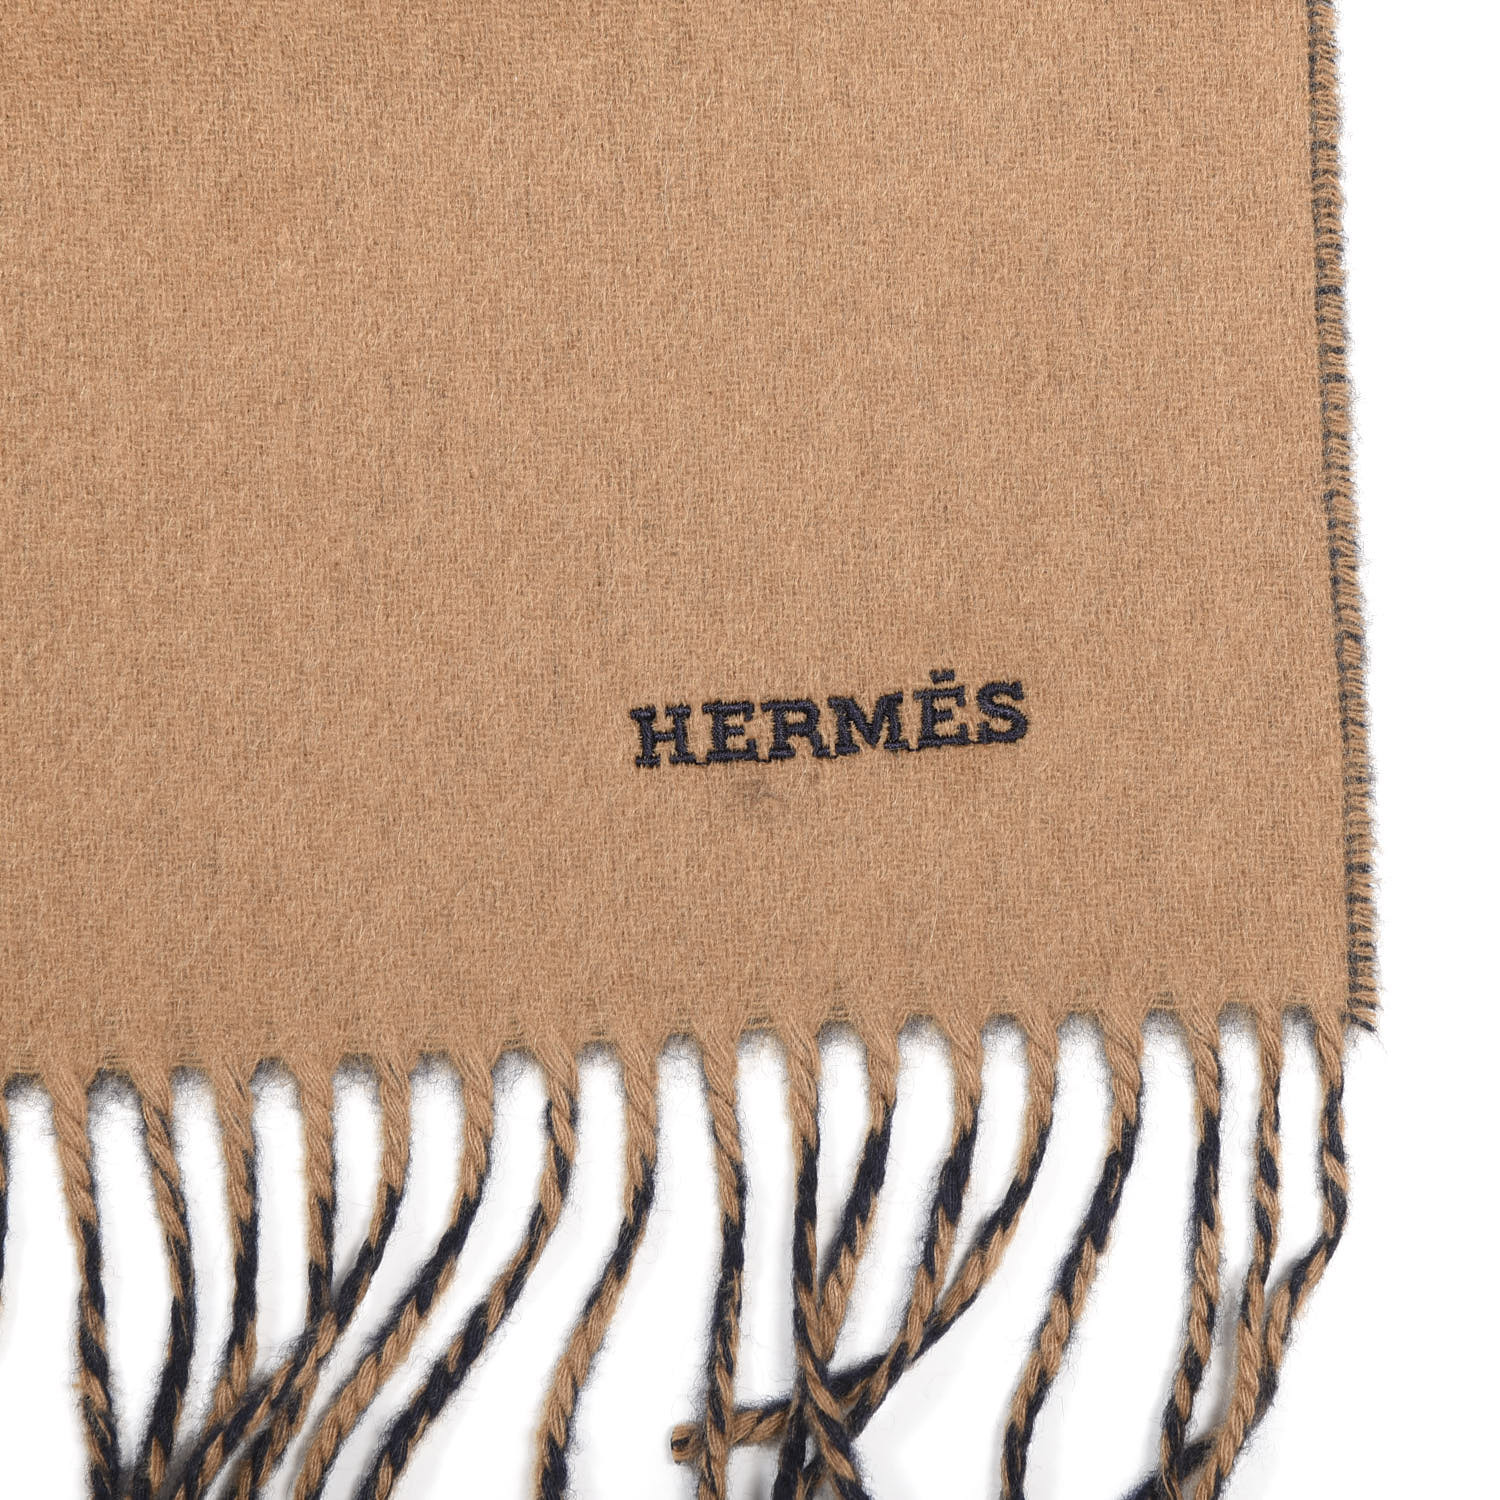 HERMES Cashmere Recto Verso Muffler Camel Marine 615017 | FASHIONPHILE